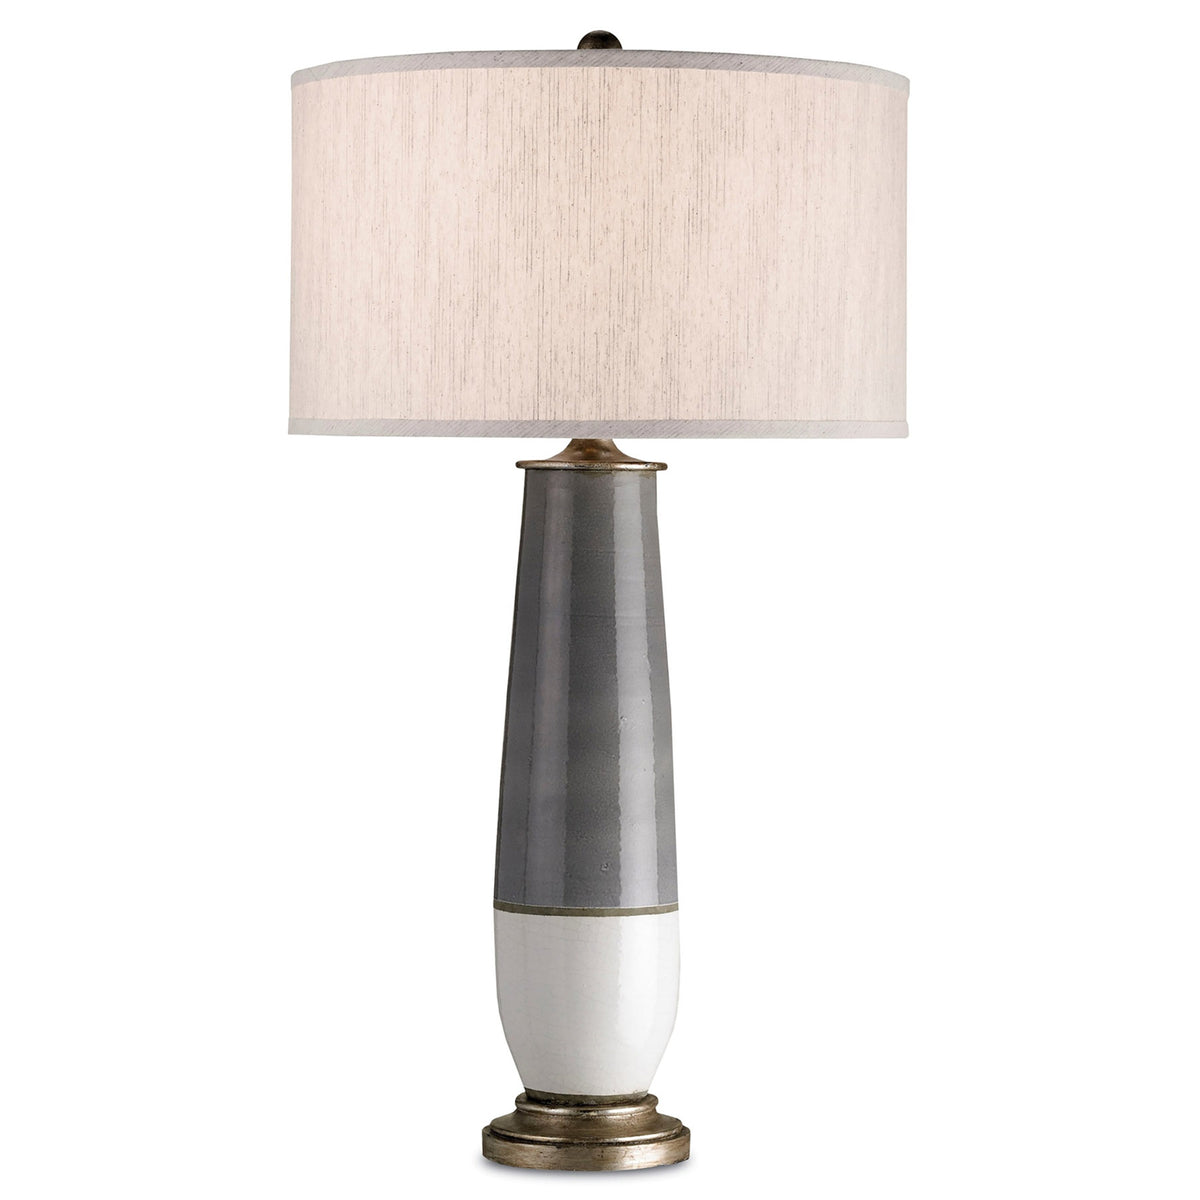 Urbino Table Lamp